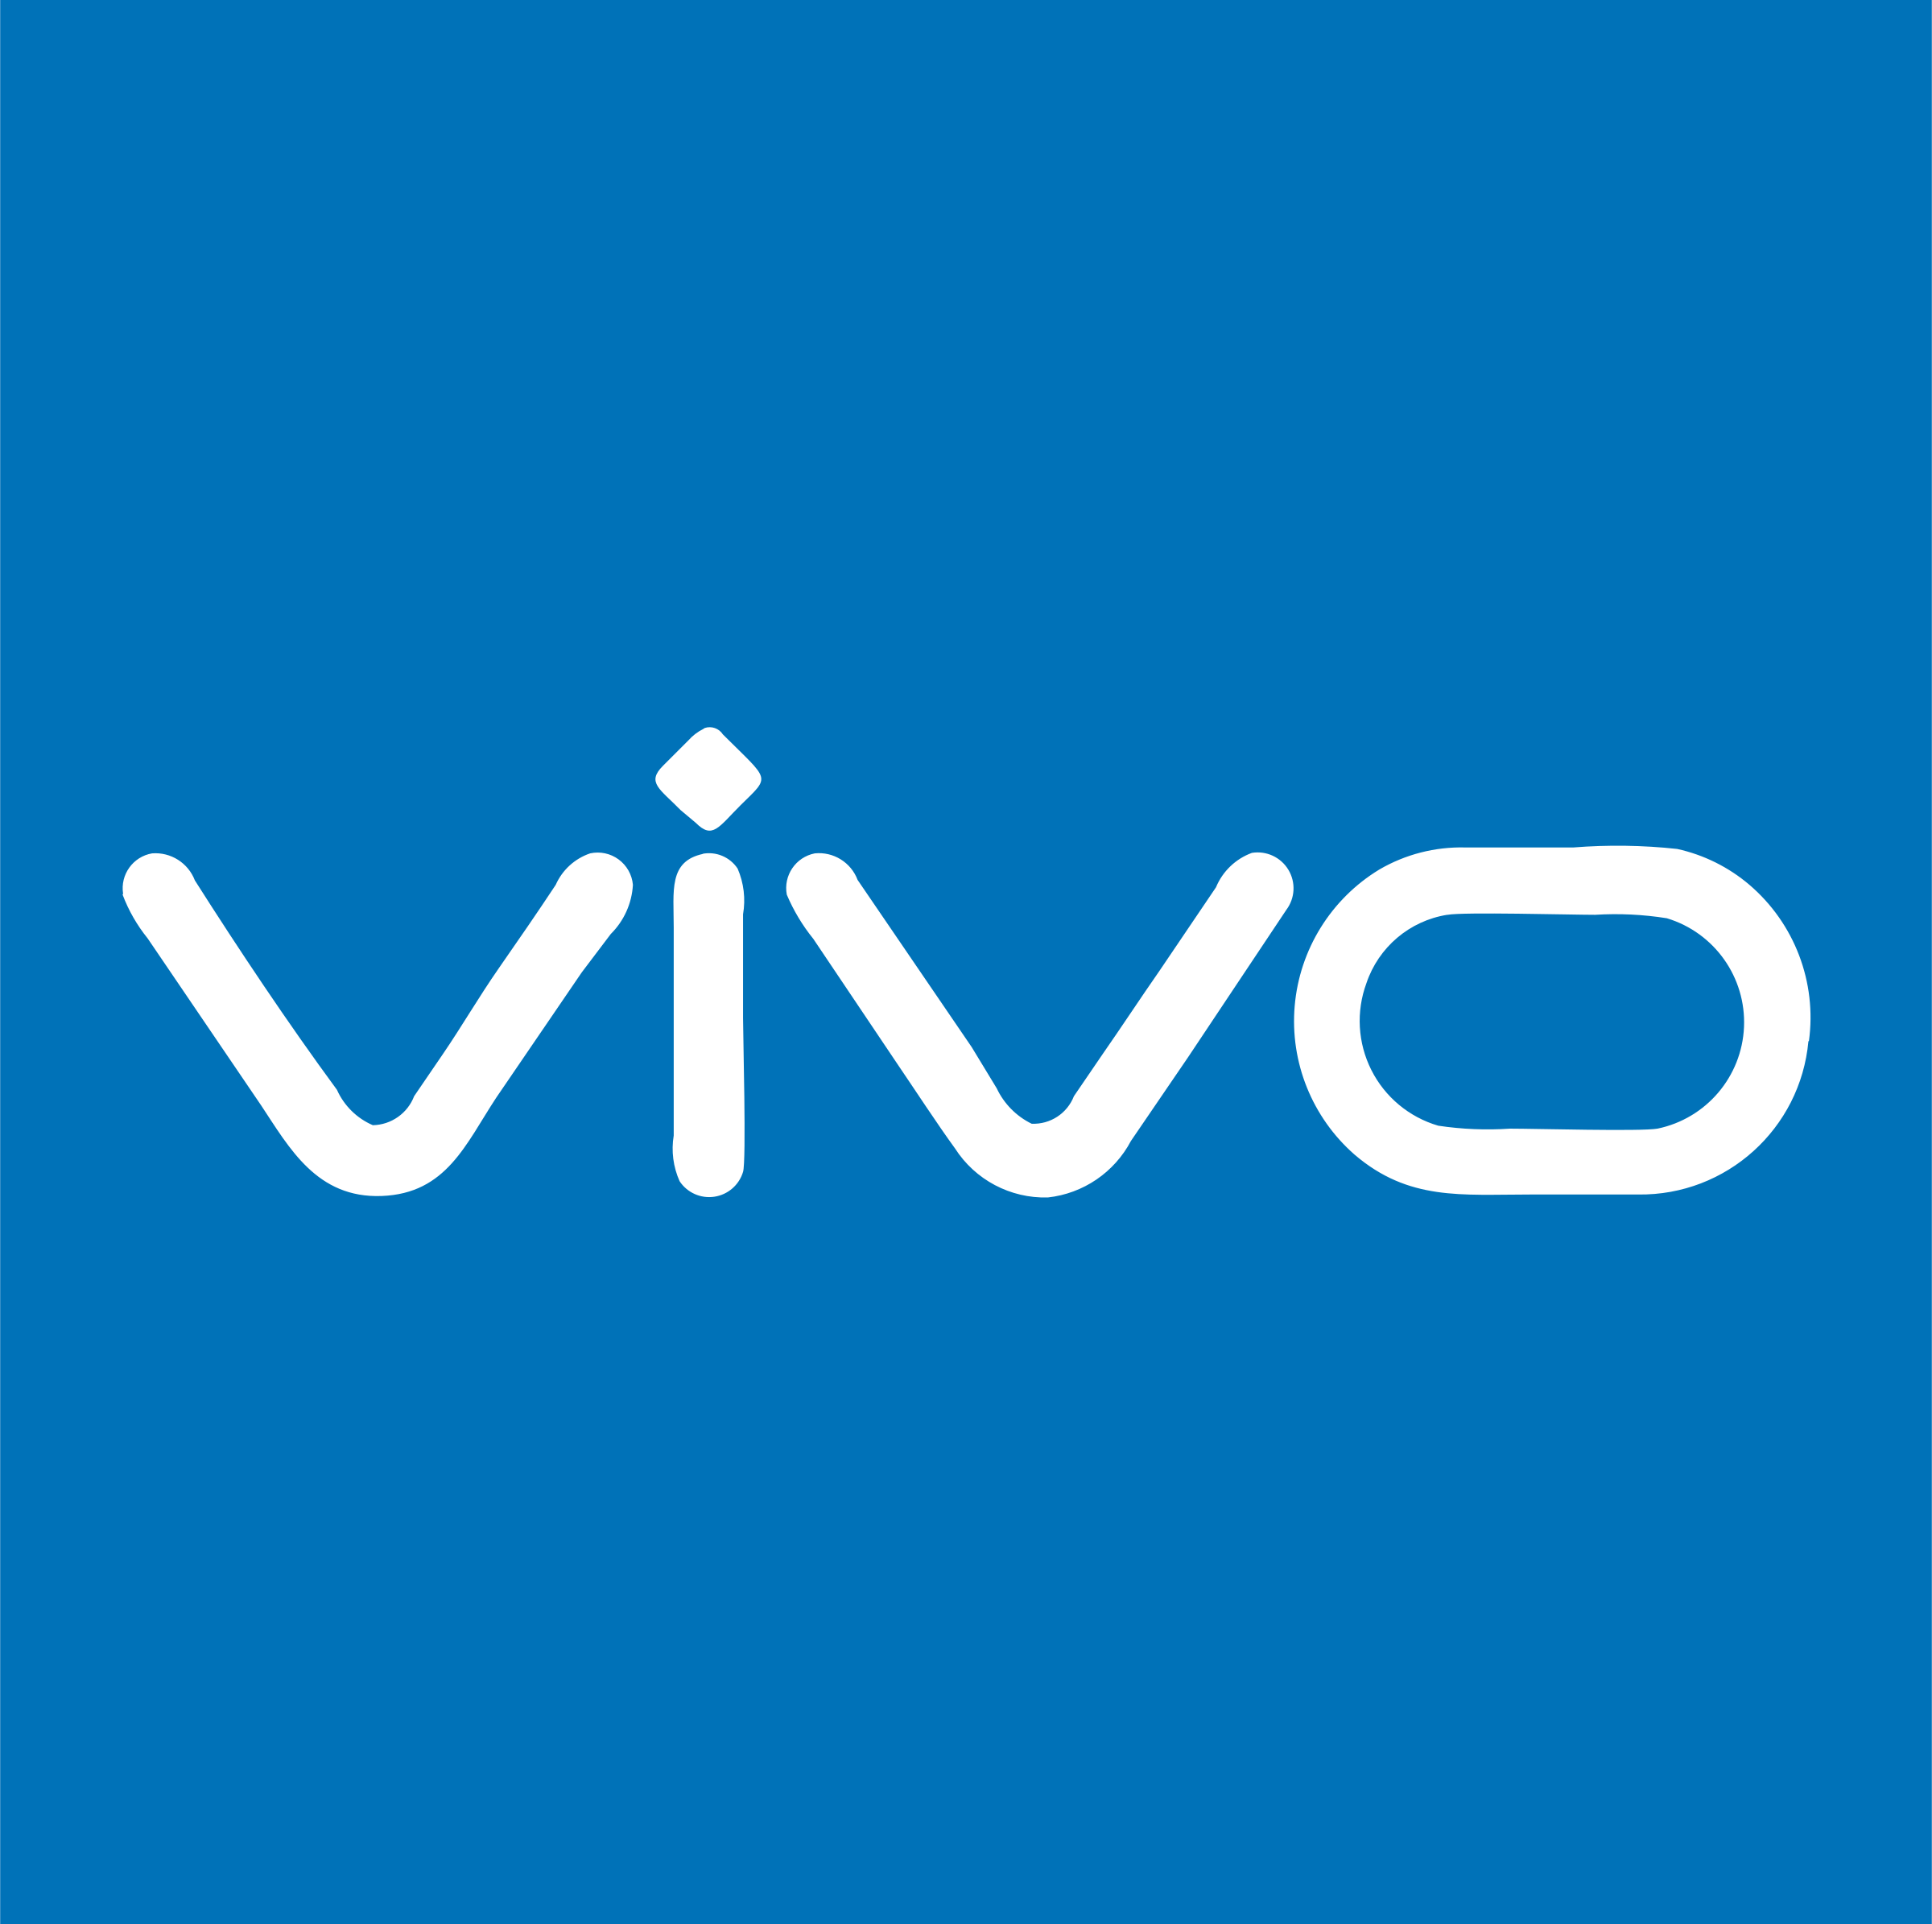 vivo-1-logo-png-transparent.png